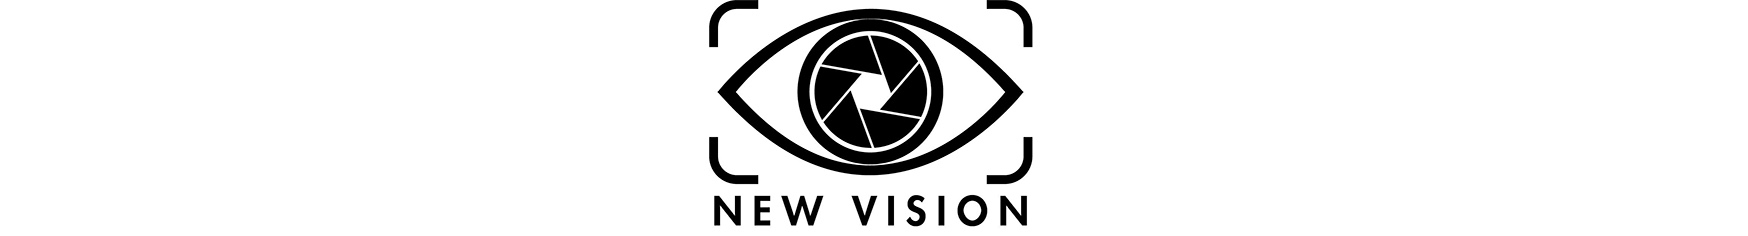 New Vision Орел